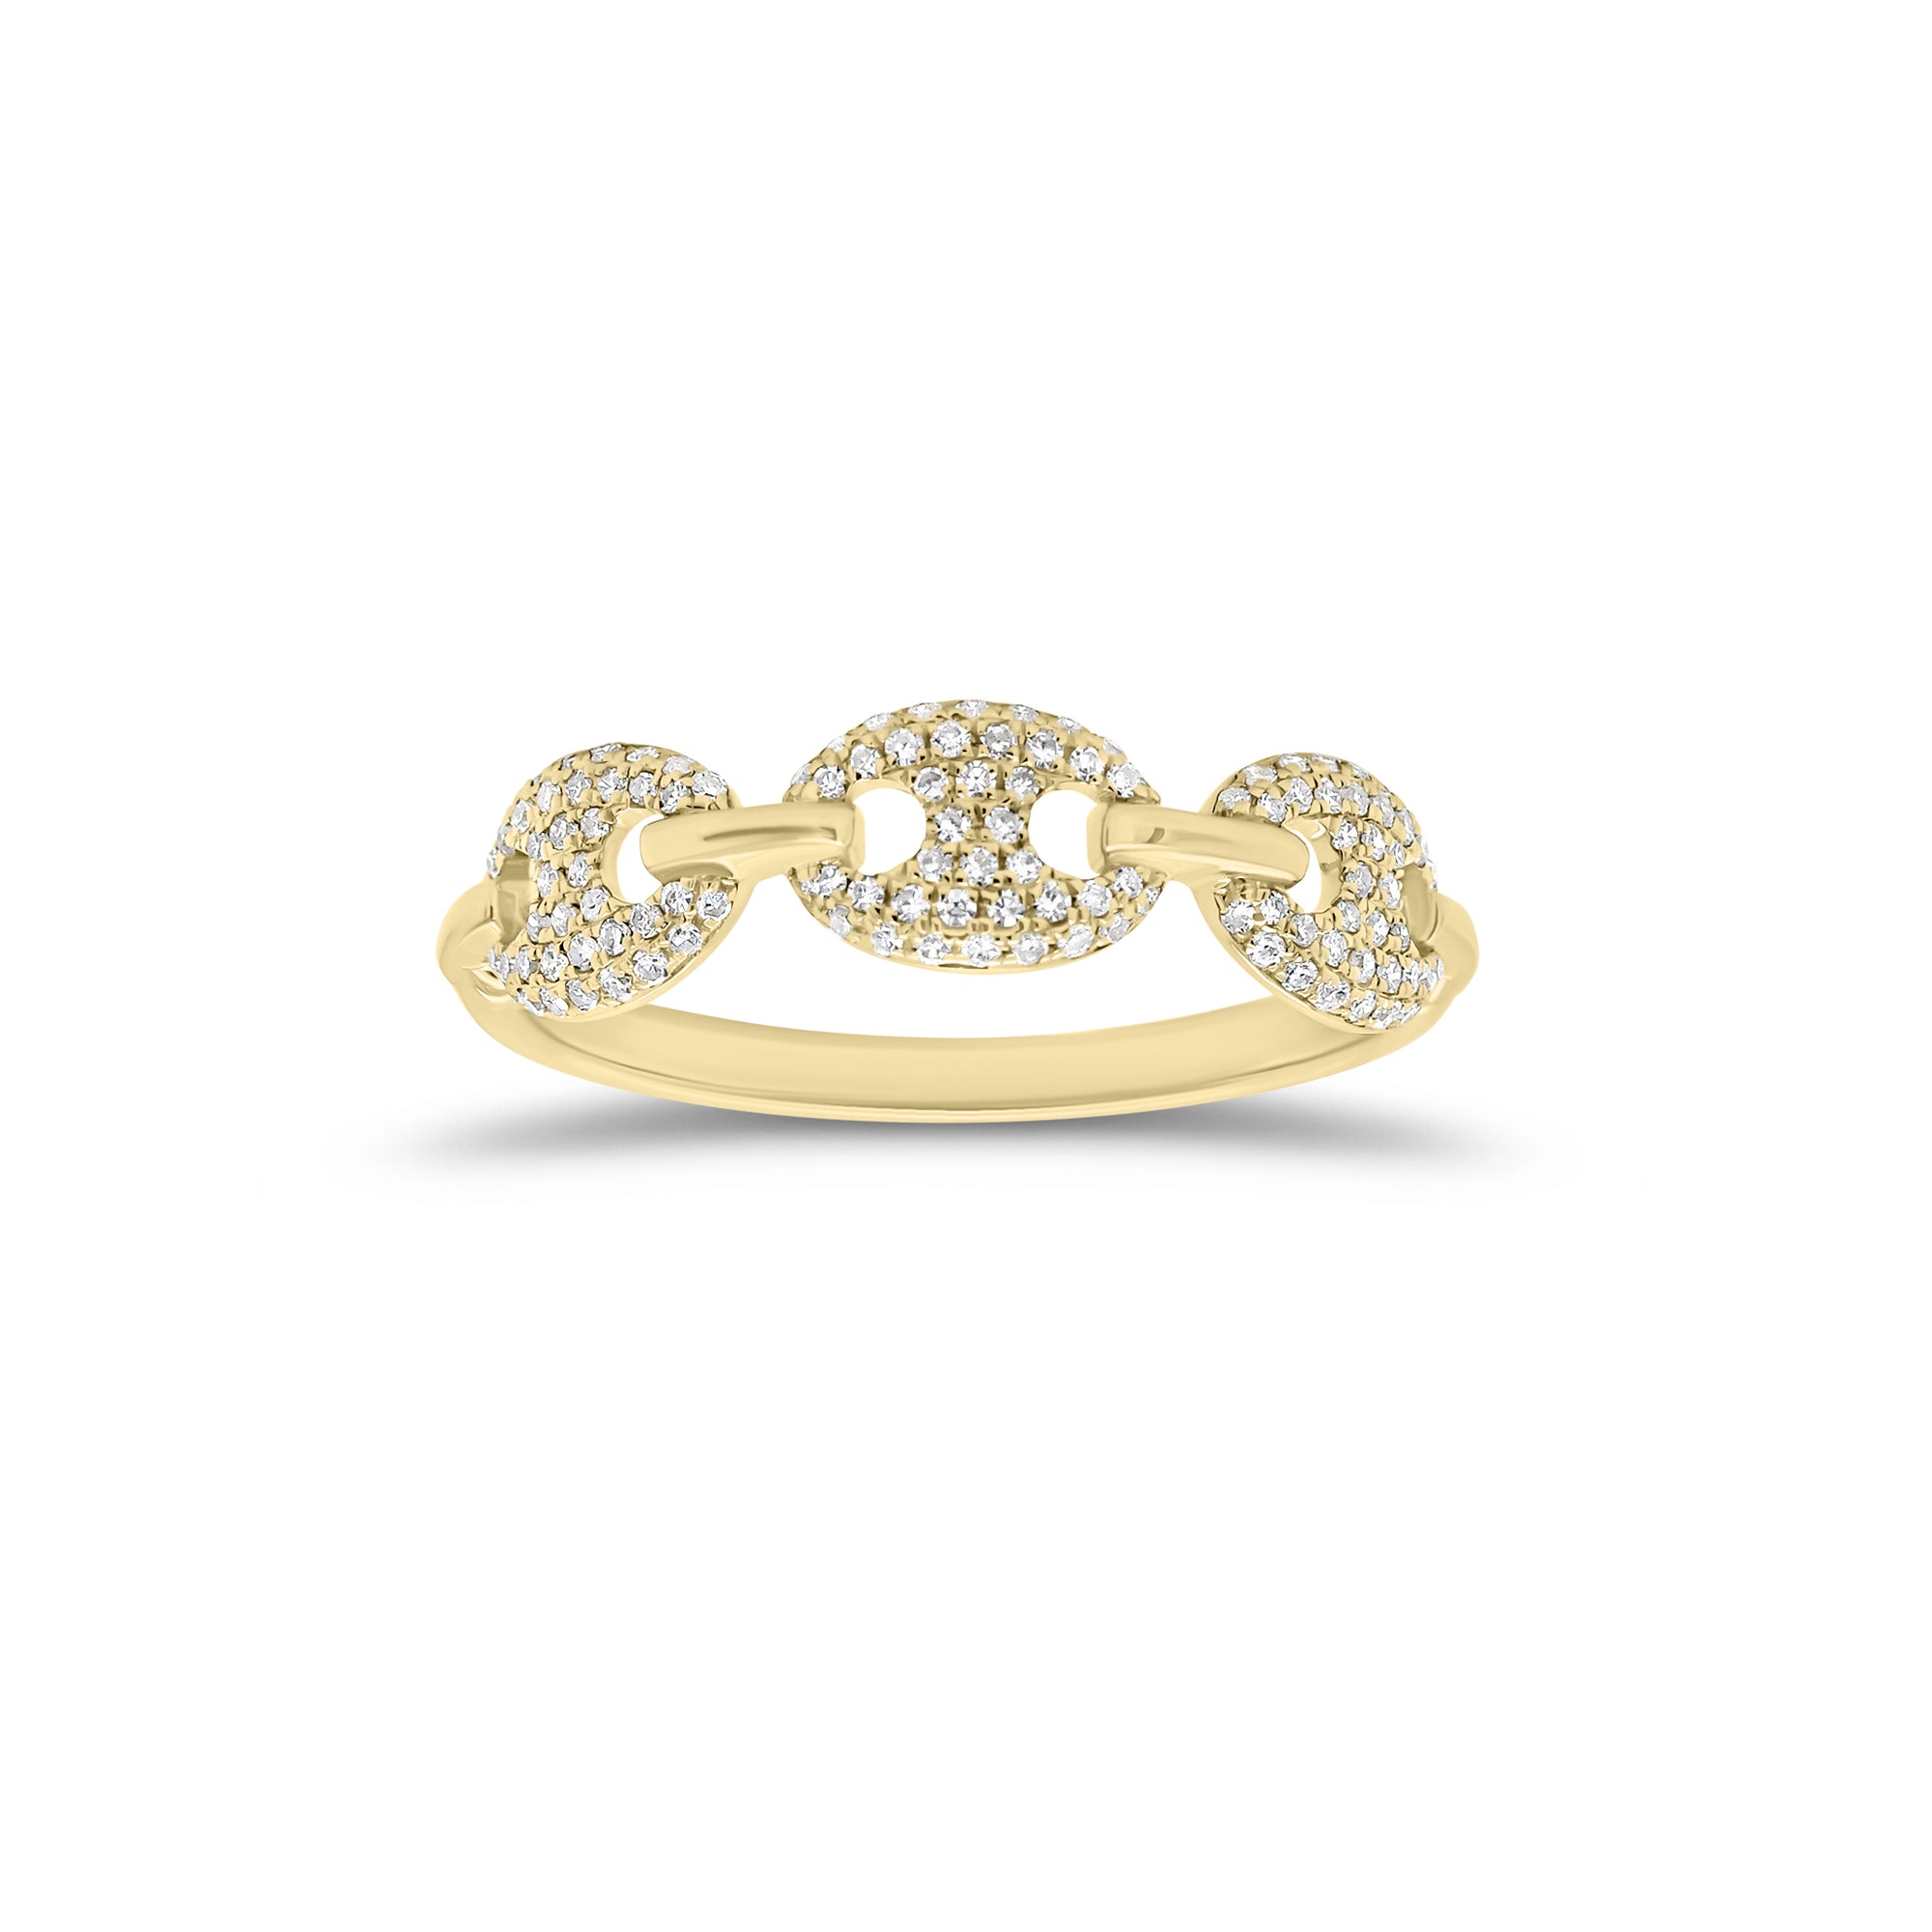 Diamond Puffed Mariner Chain Stacking Ring - 14K gold weighing 1.84 grams - 126 round diamonds weighing 0.23 carats